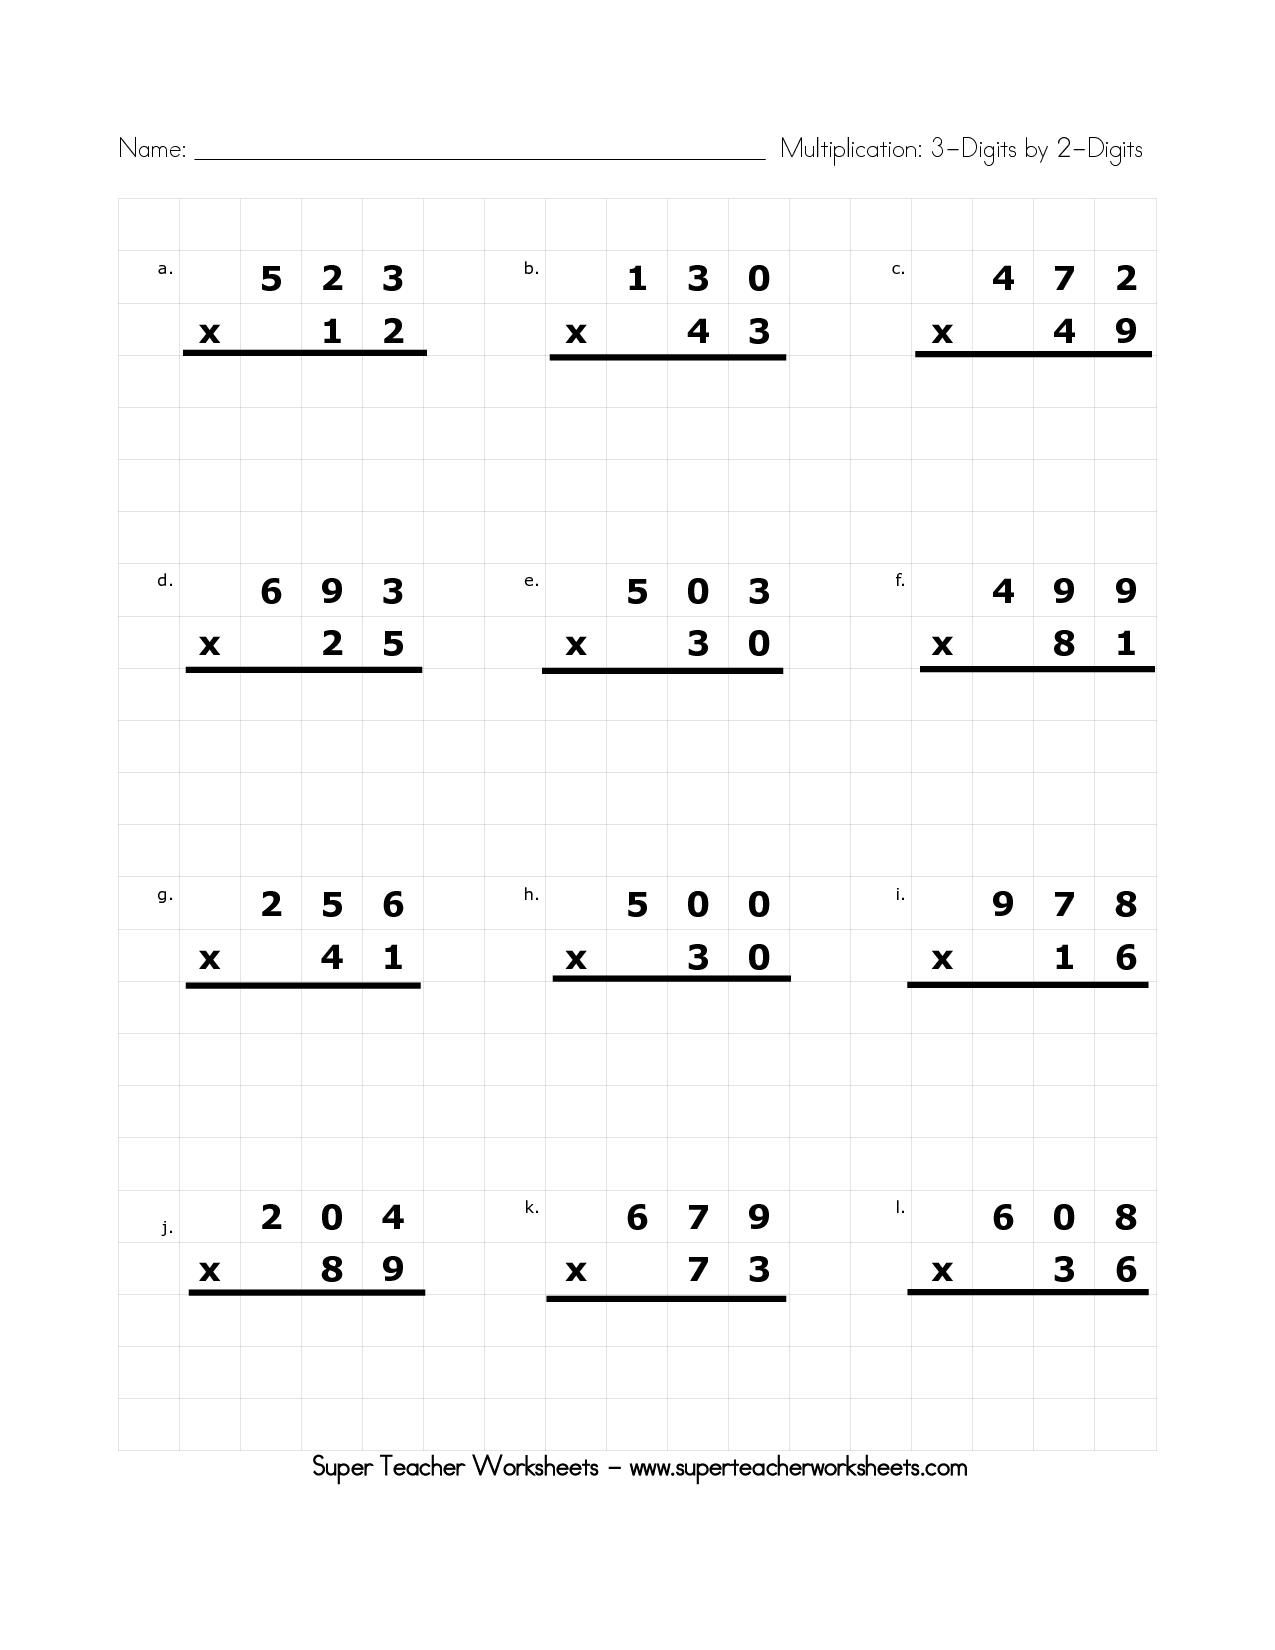 Super Teacher Worksheets Math Puzzle Picture Multiplication worksheet